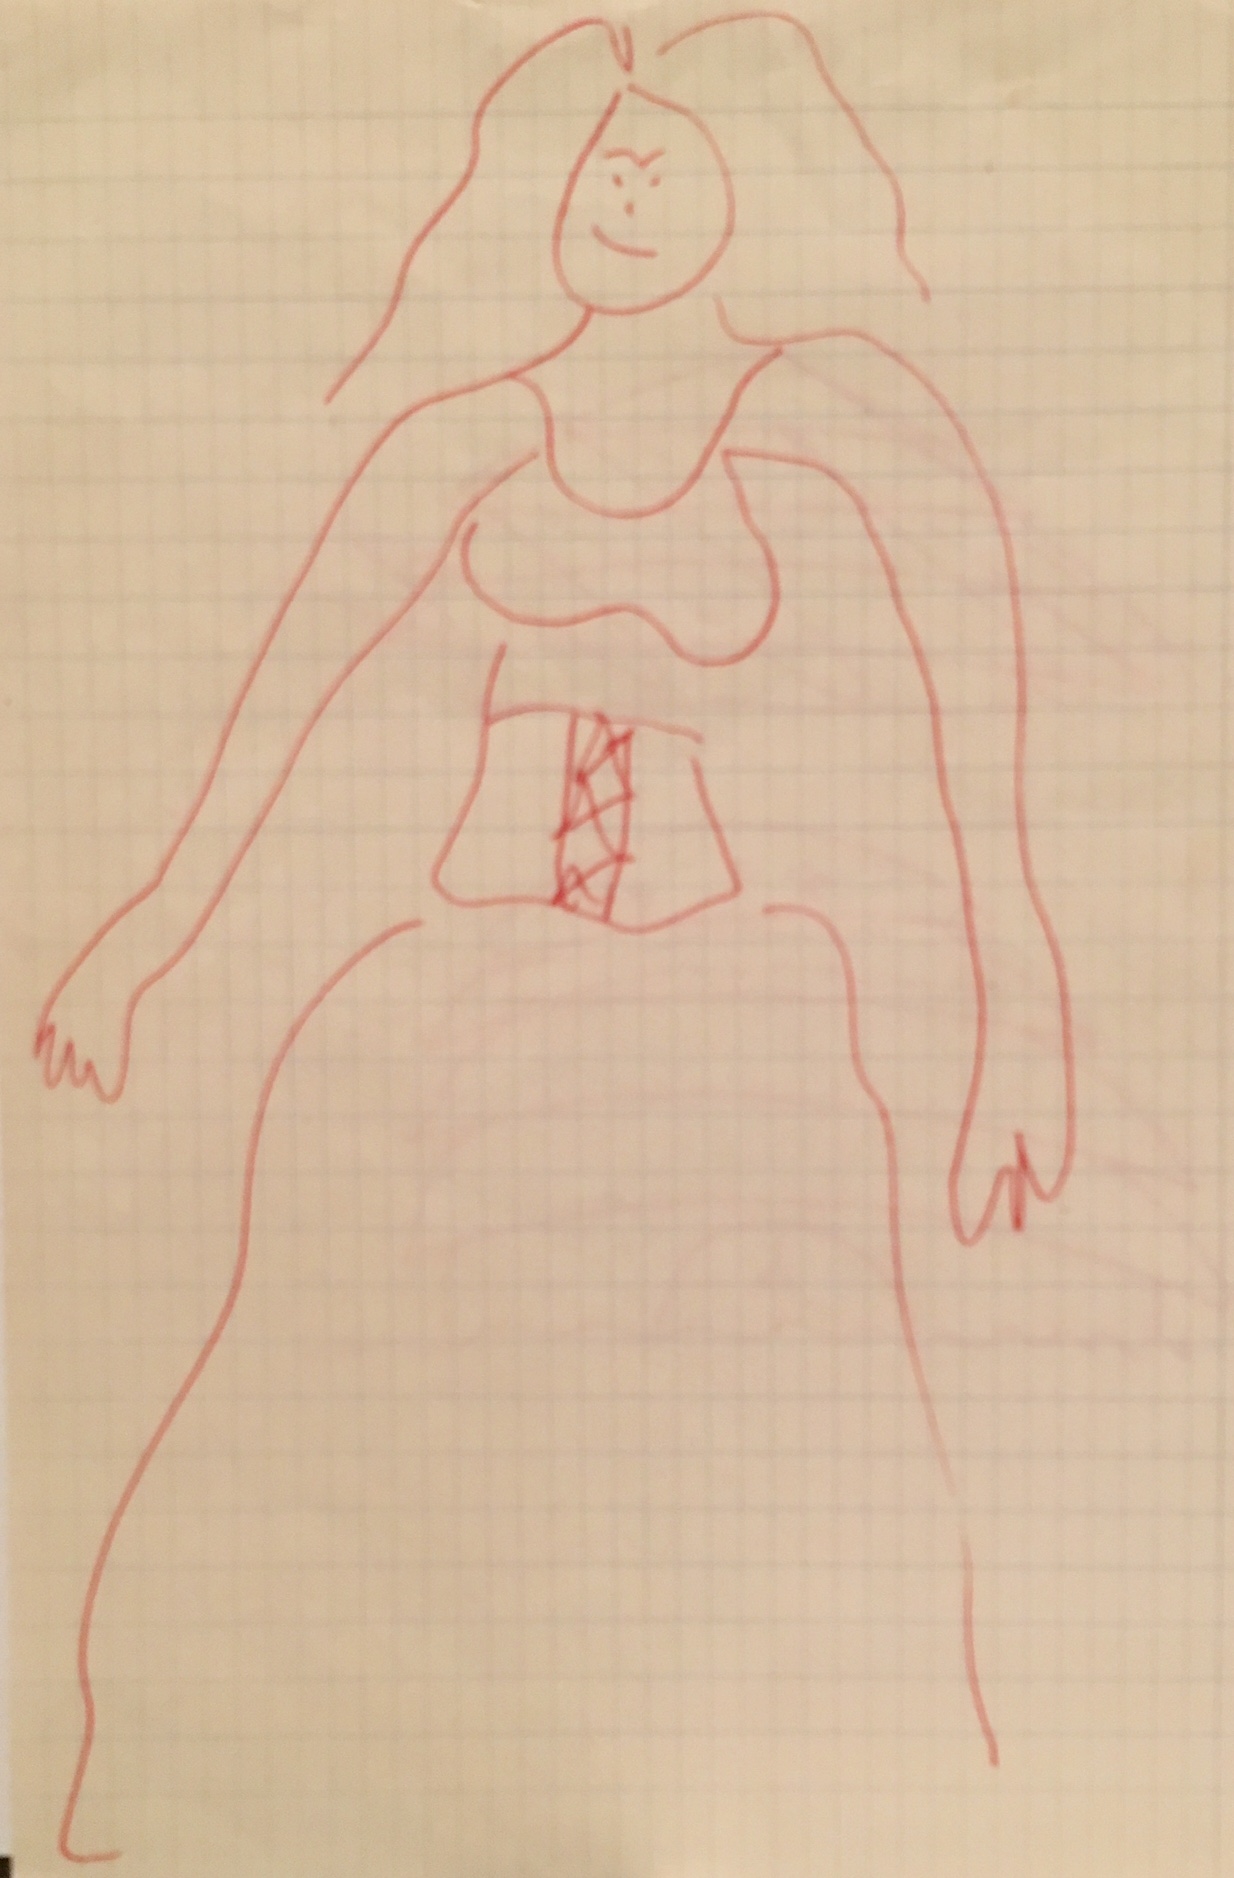 John Lennon drawing of woman